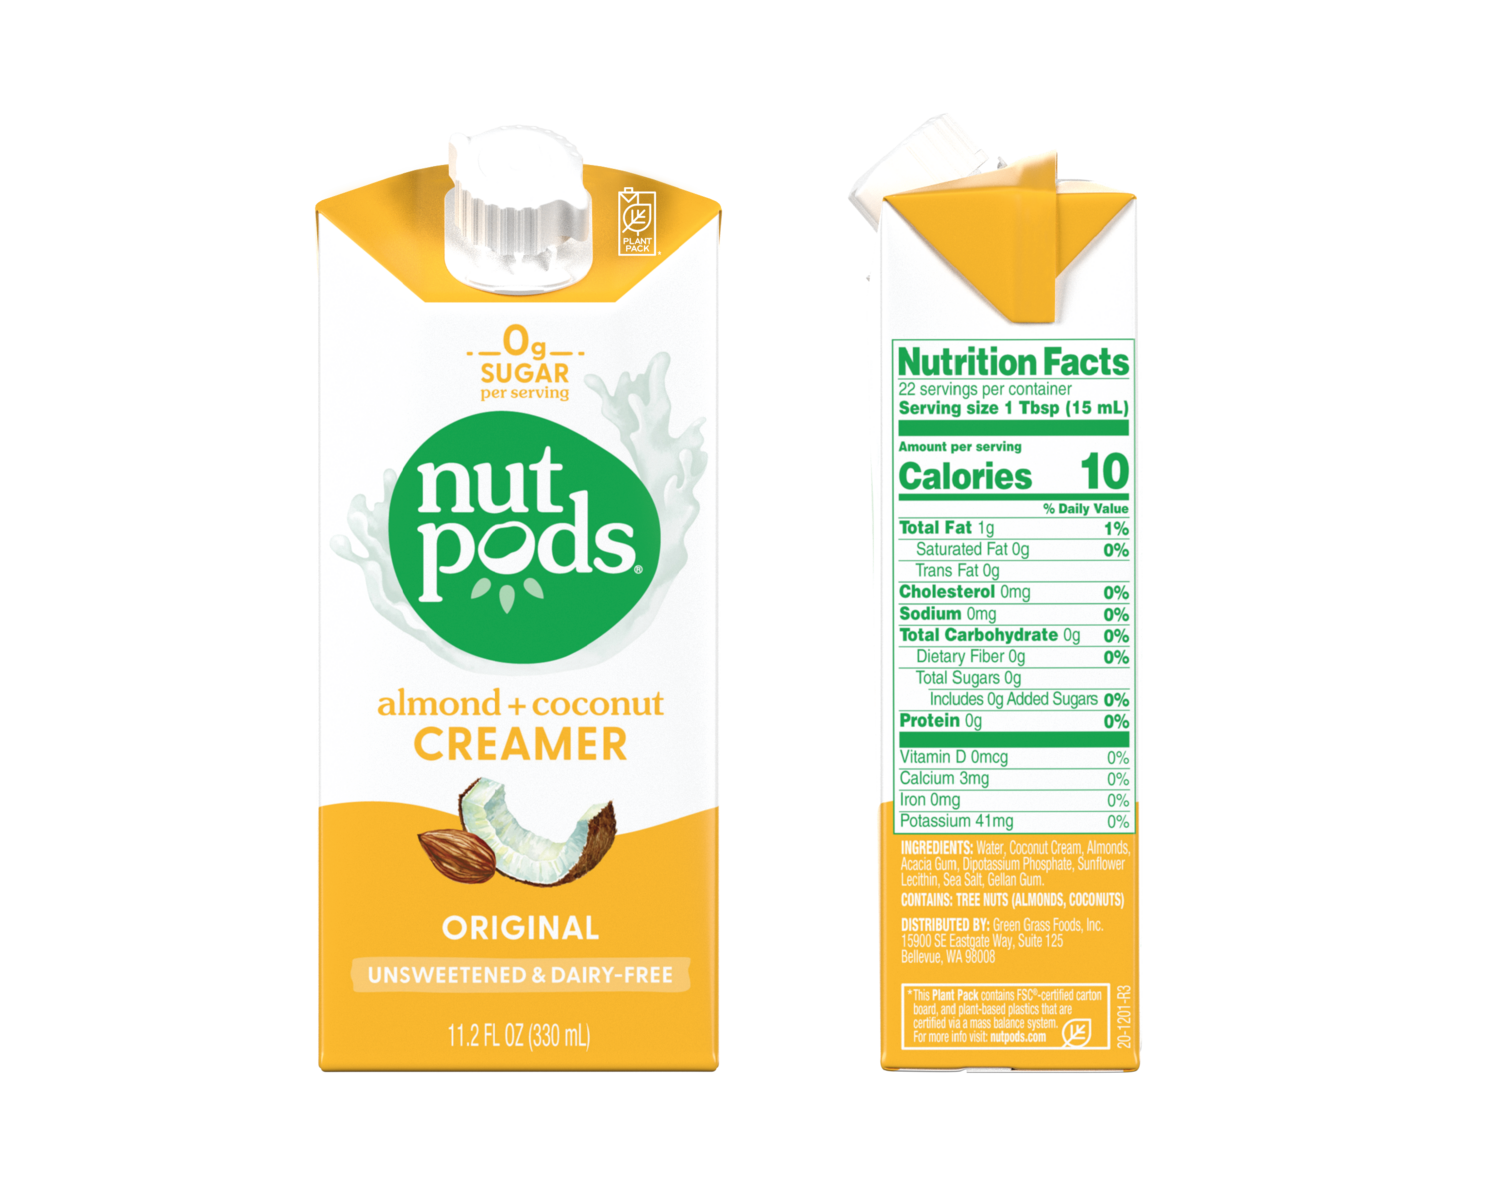 Nut Pods Almond + Coconut Creamer Original 0g Sugar